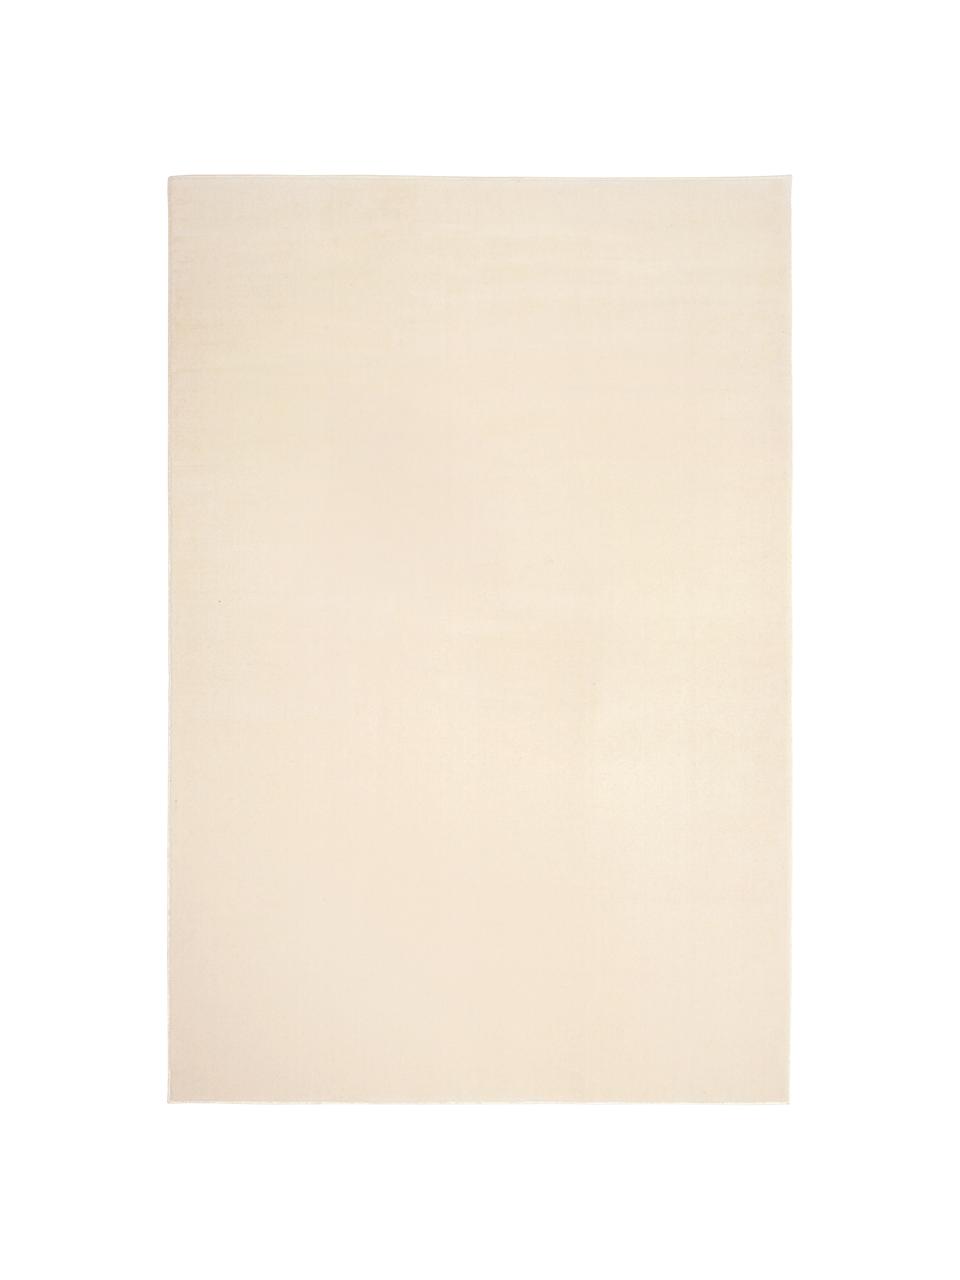 Tapis pure laine beige Ida, Beige, larg. 120 x long. 180 cm (taille S)